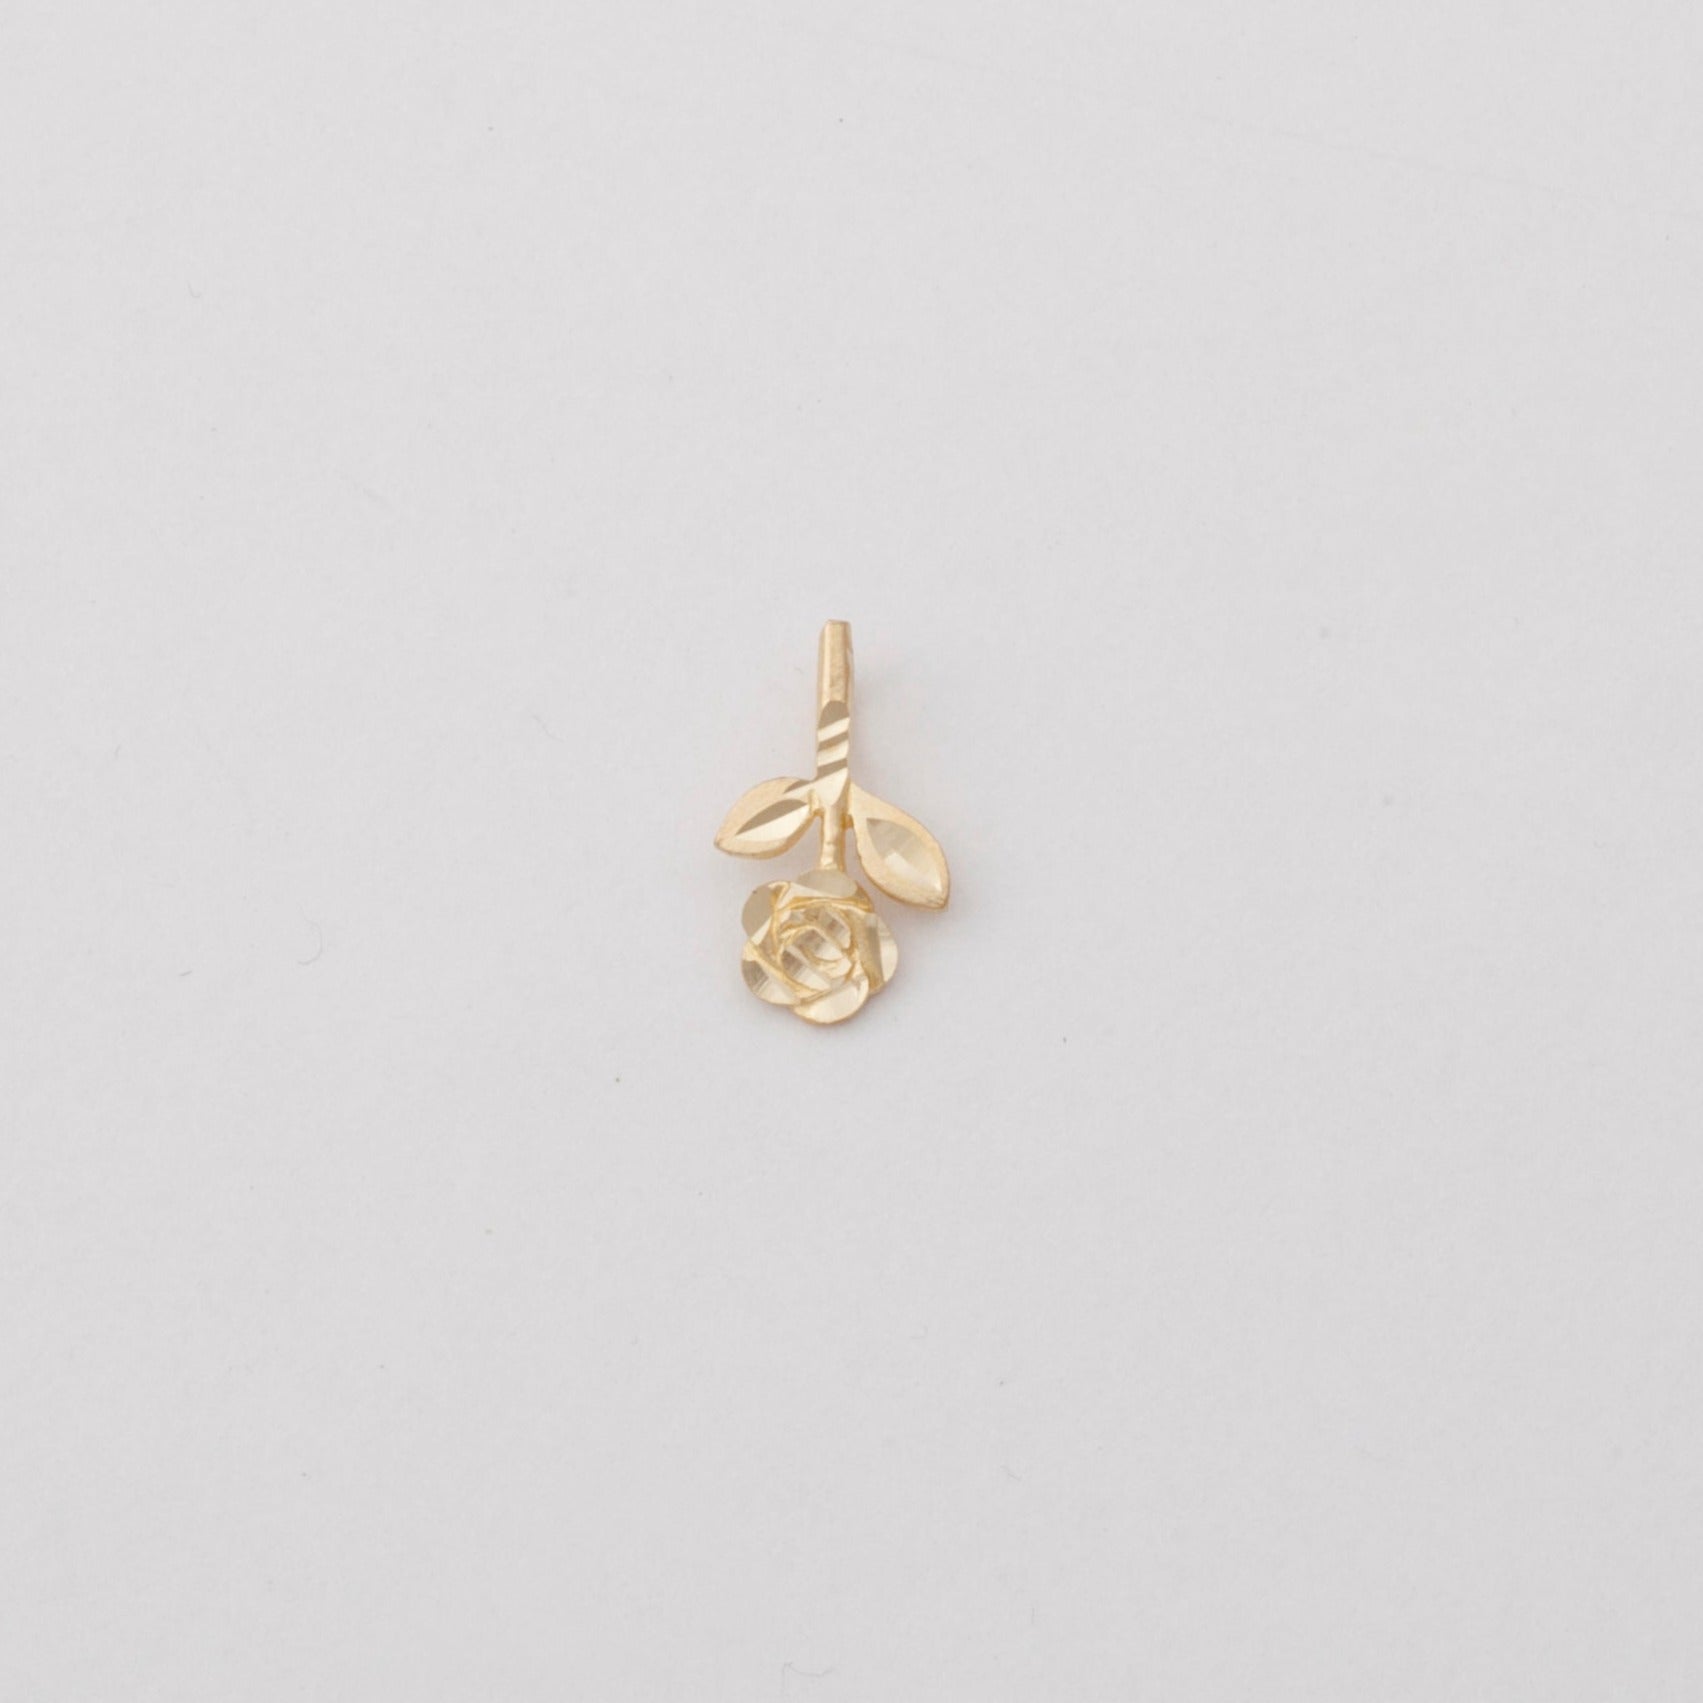 10k gold upside down flower pendant with diamond cut details